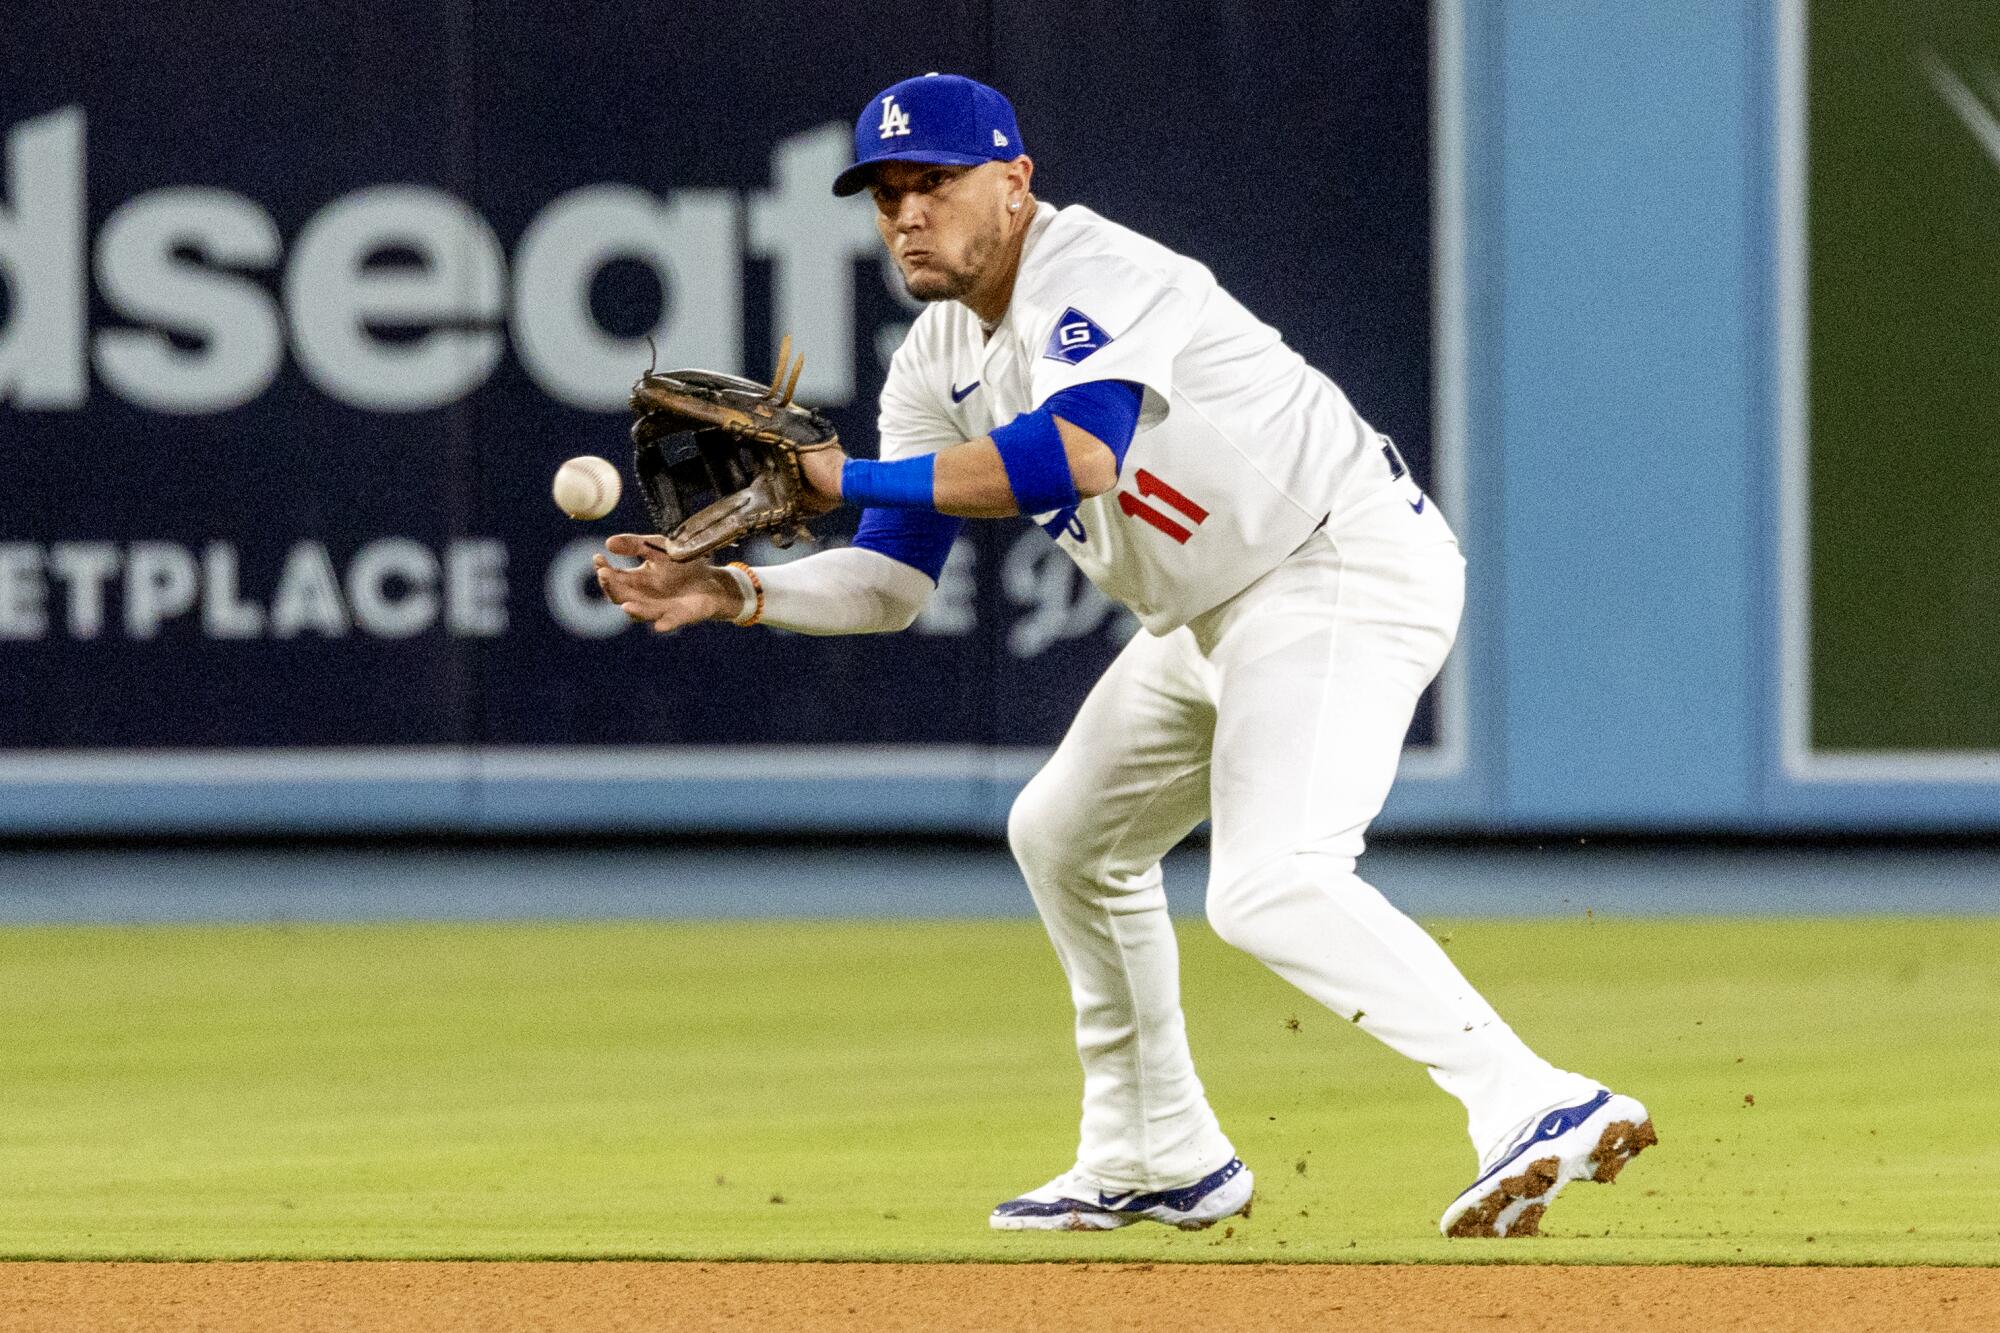 Dodgers shortstop Miguel Rojas fields the ball.